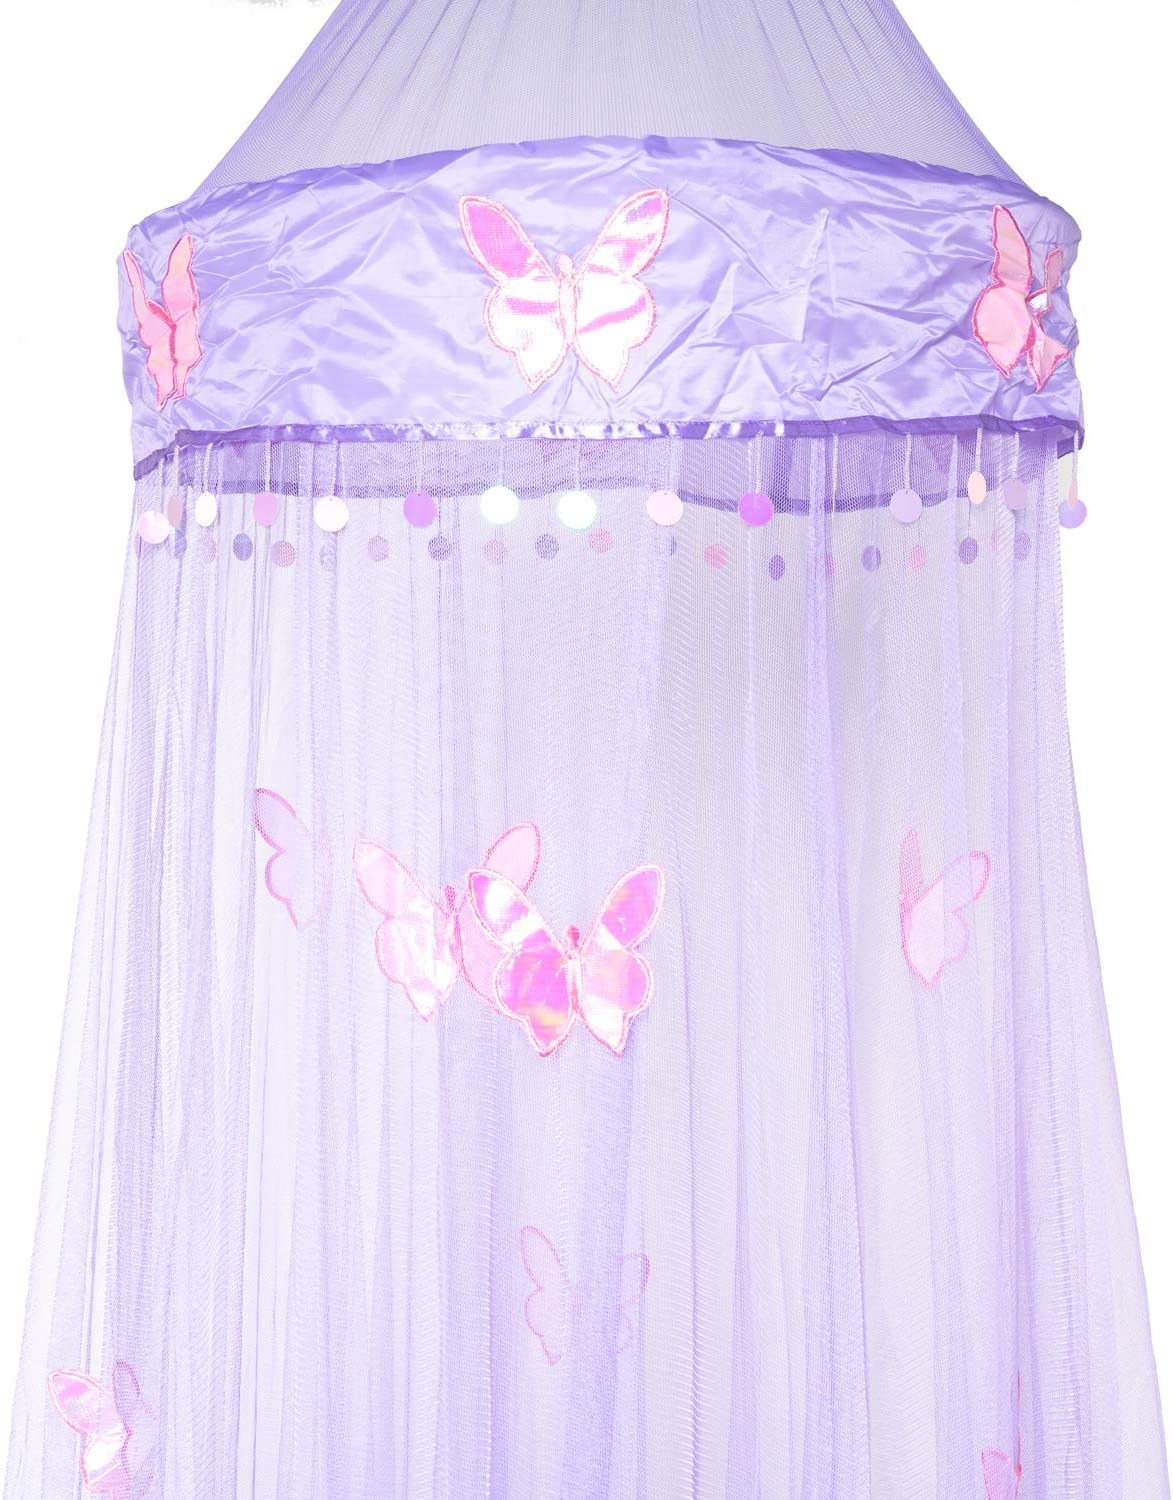 Comedia de enredo novela telescopio OctoRose Butterfly Bed Canopy Mosquito NET Crib Twin Full Queen King  (Purple) | eBay